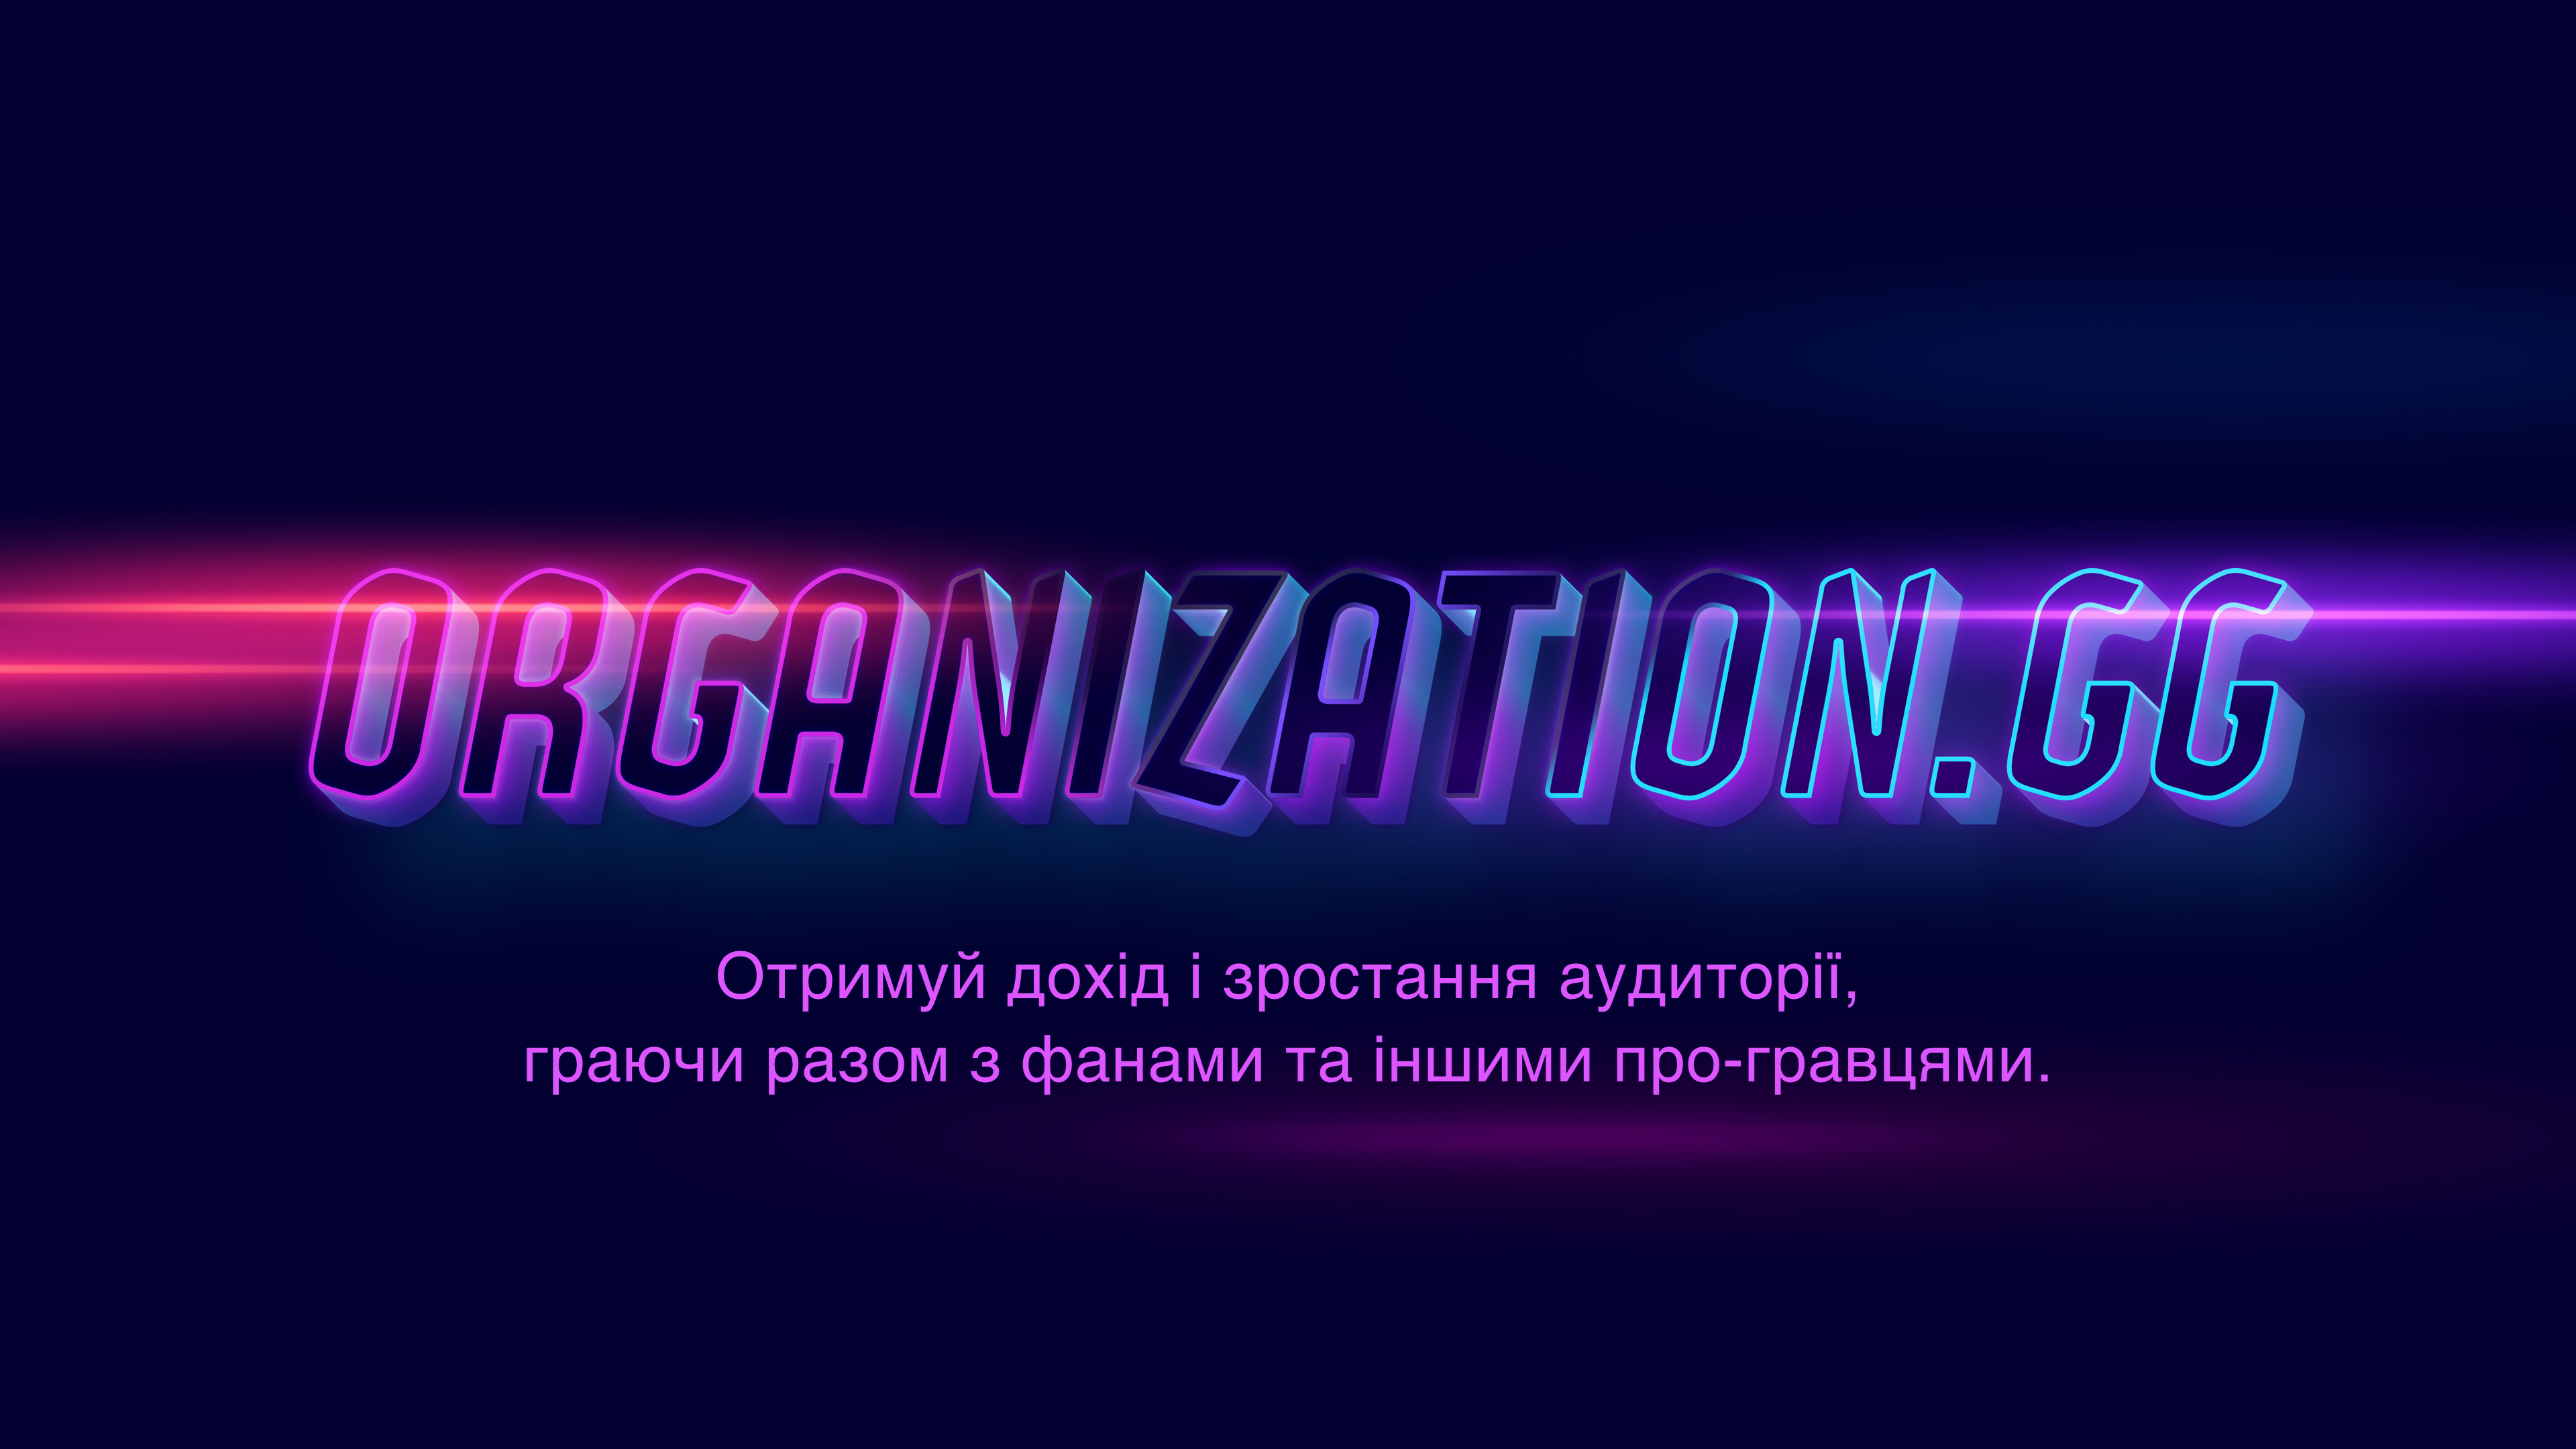 Organization.GG